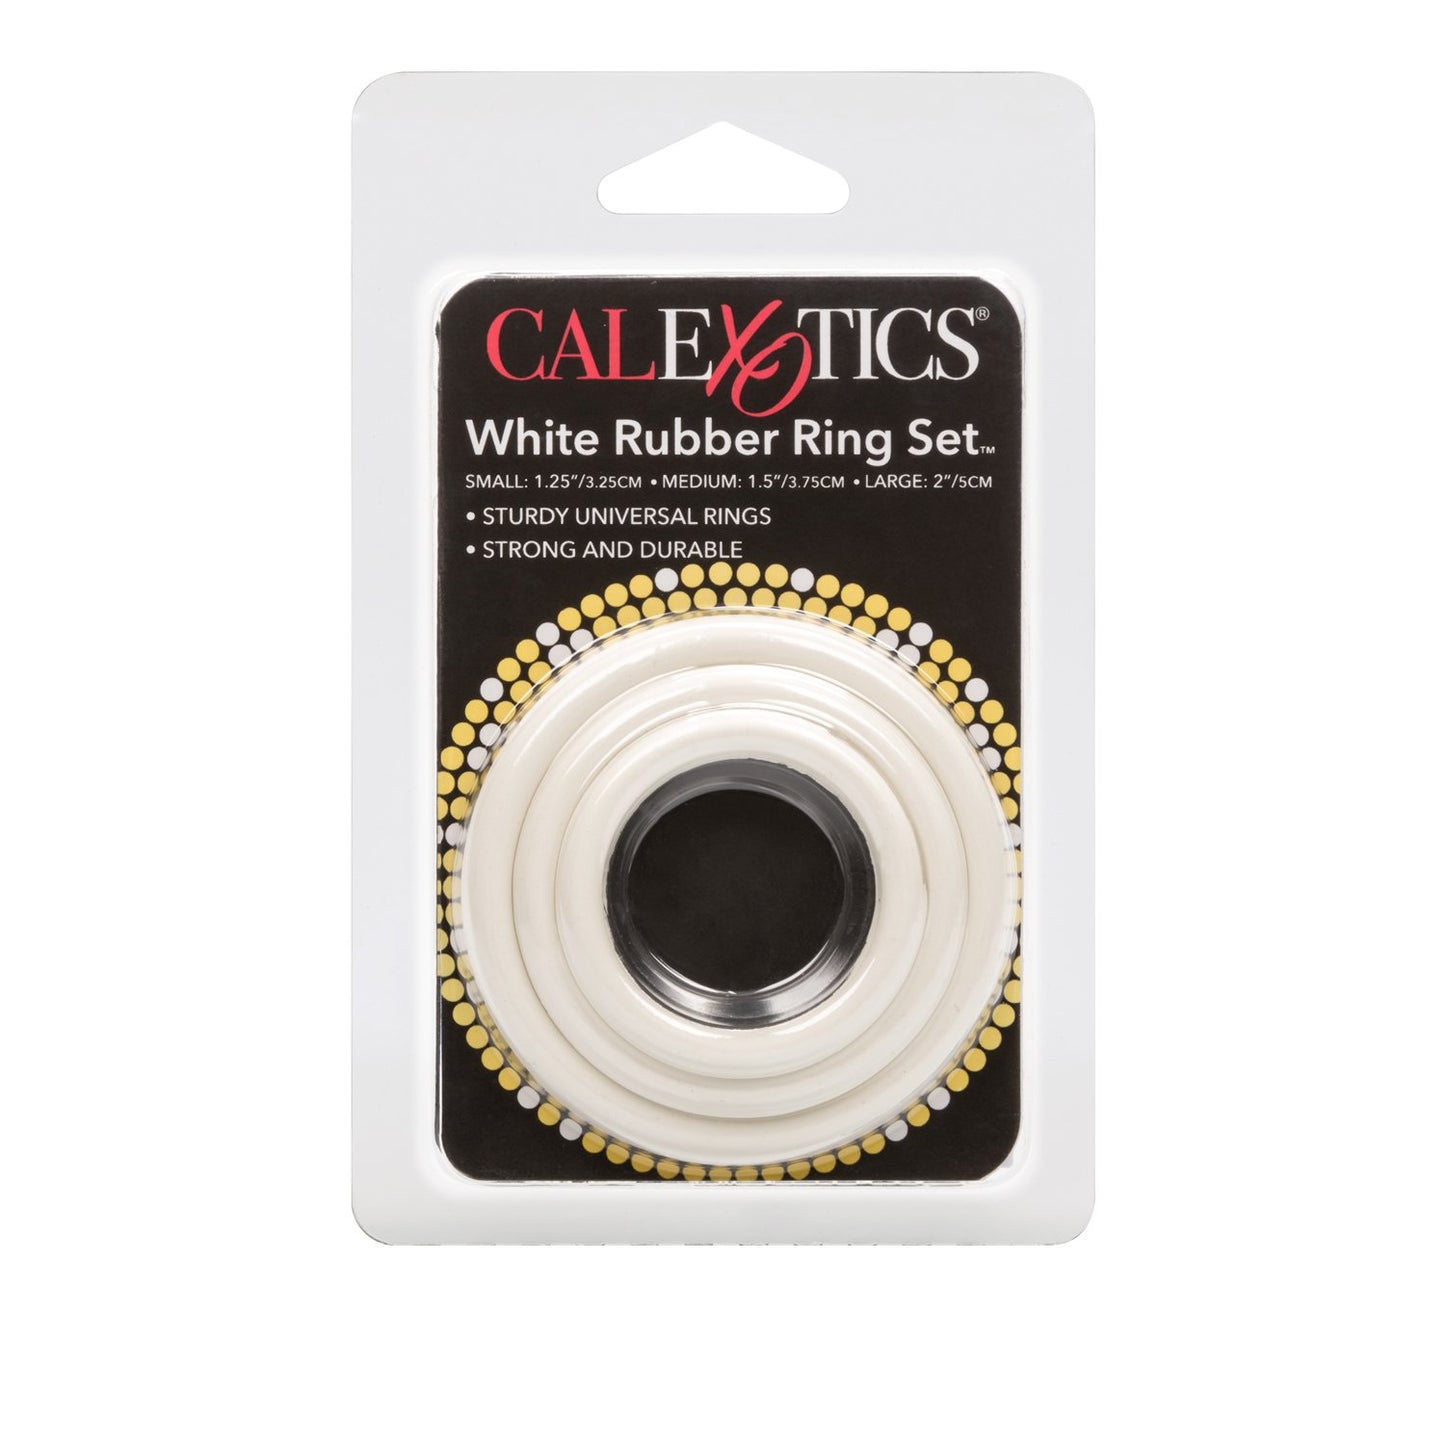 White Rubber Ring Set